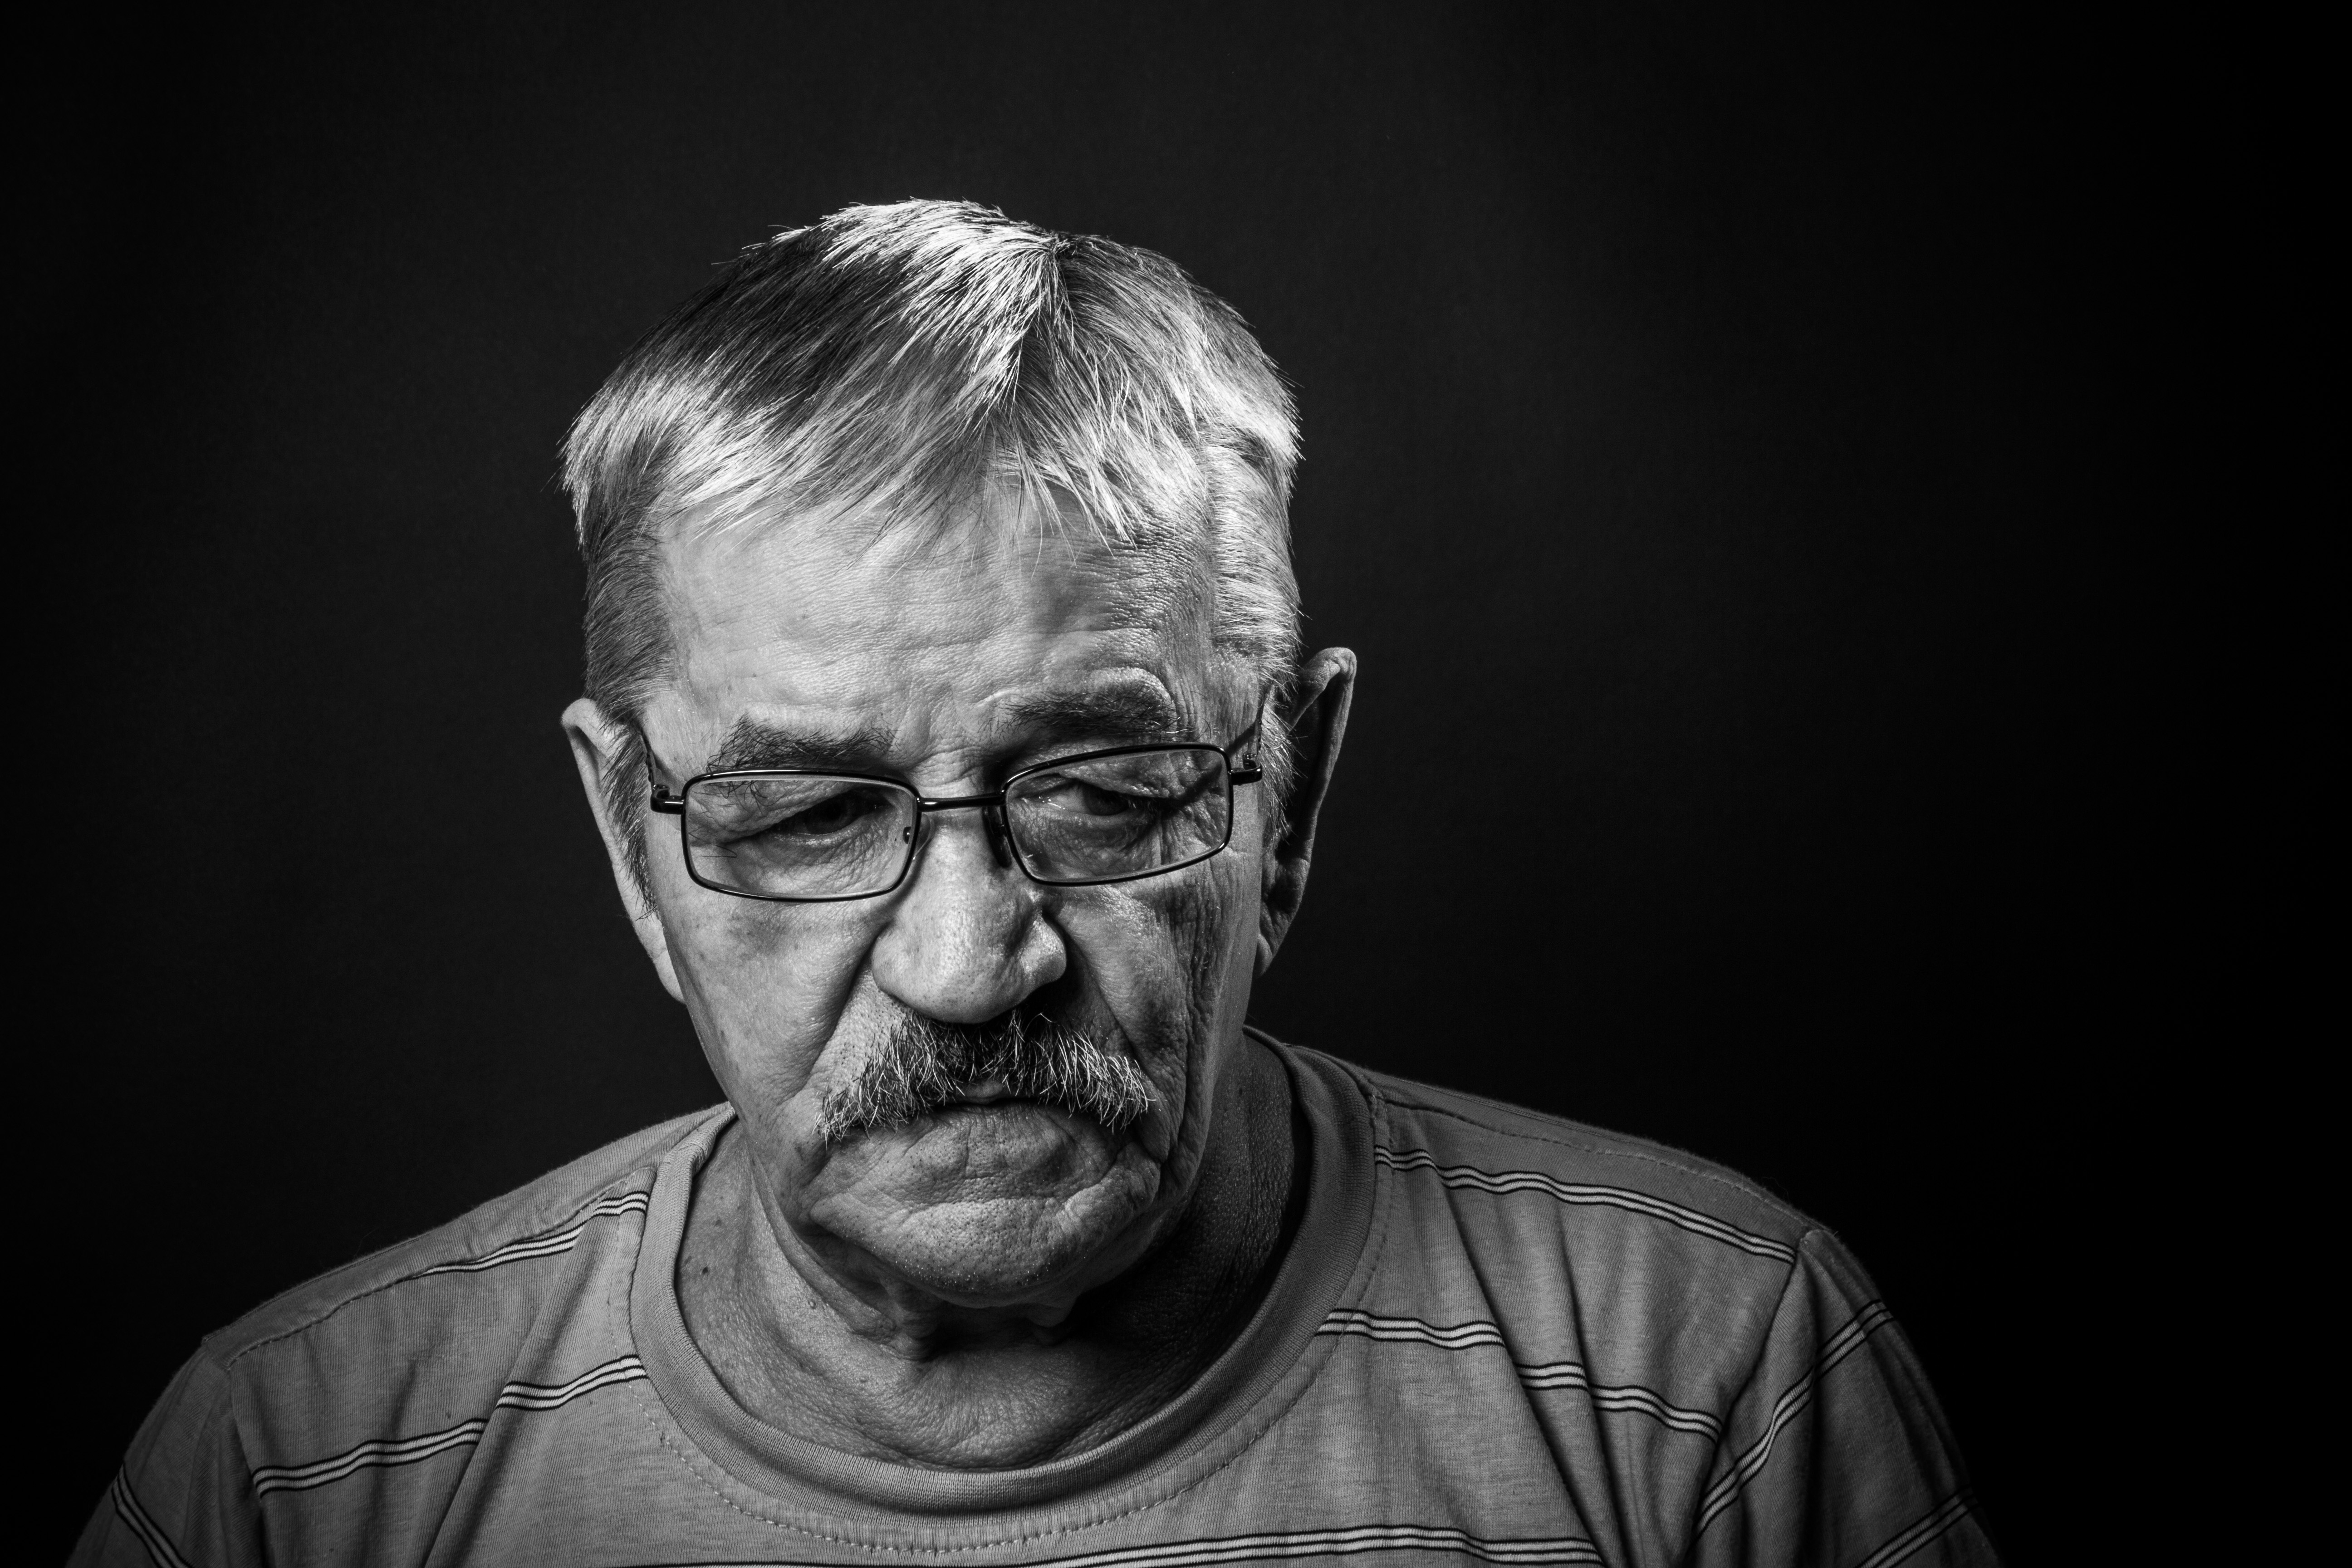 Very old senior man portrait | Source: Shutterstock